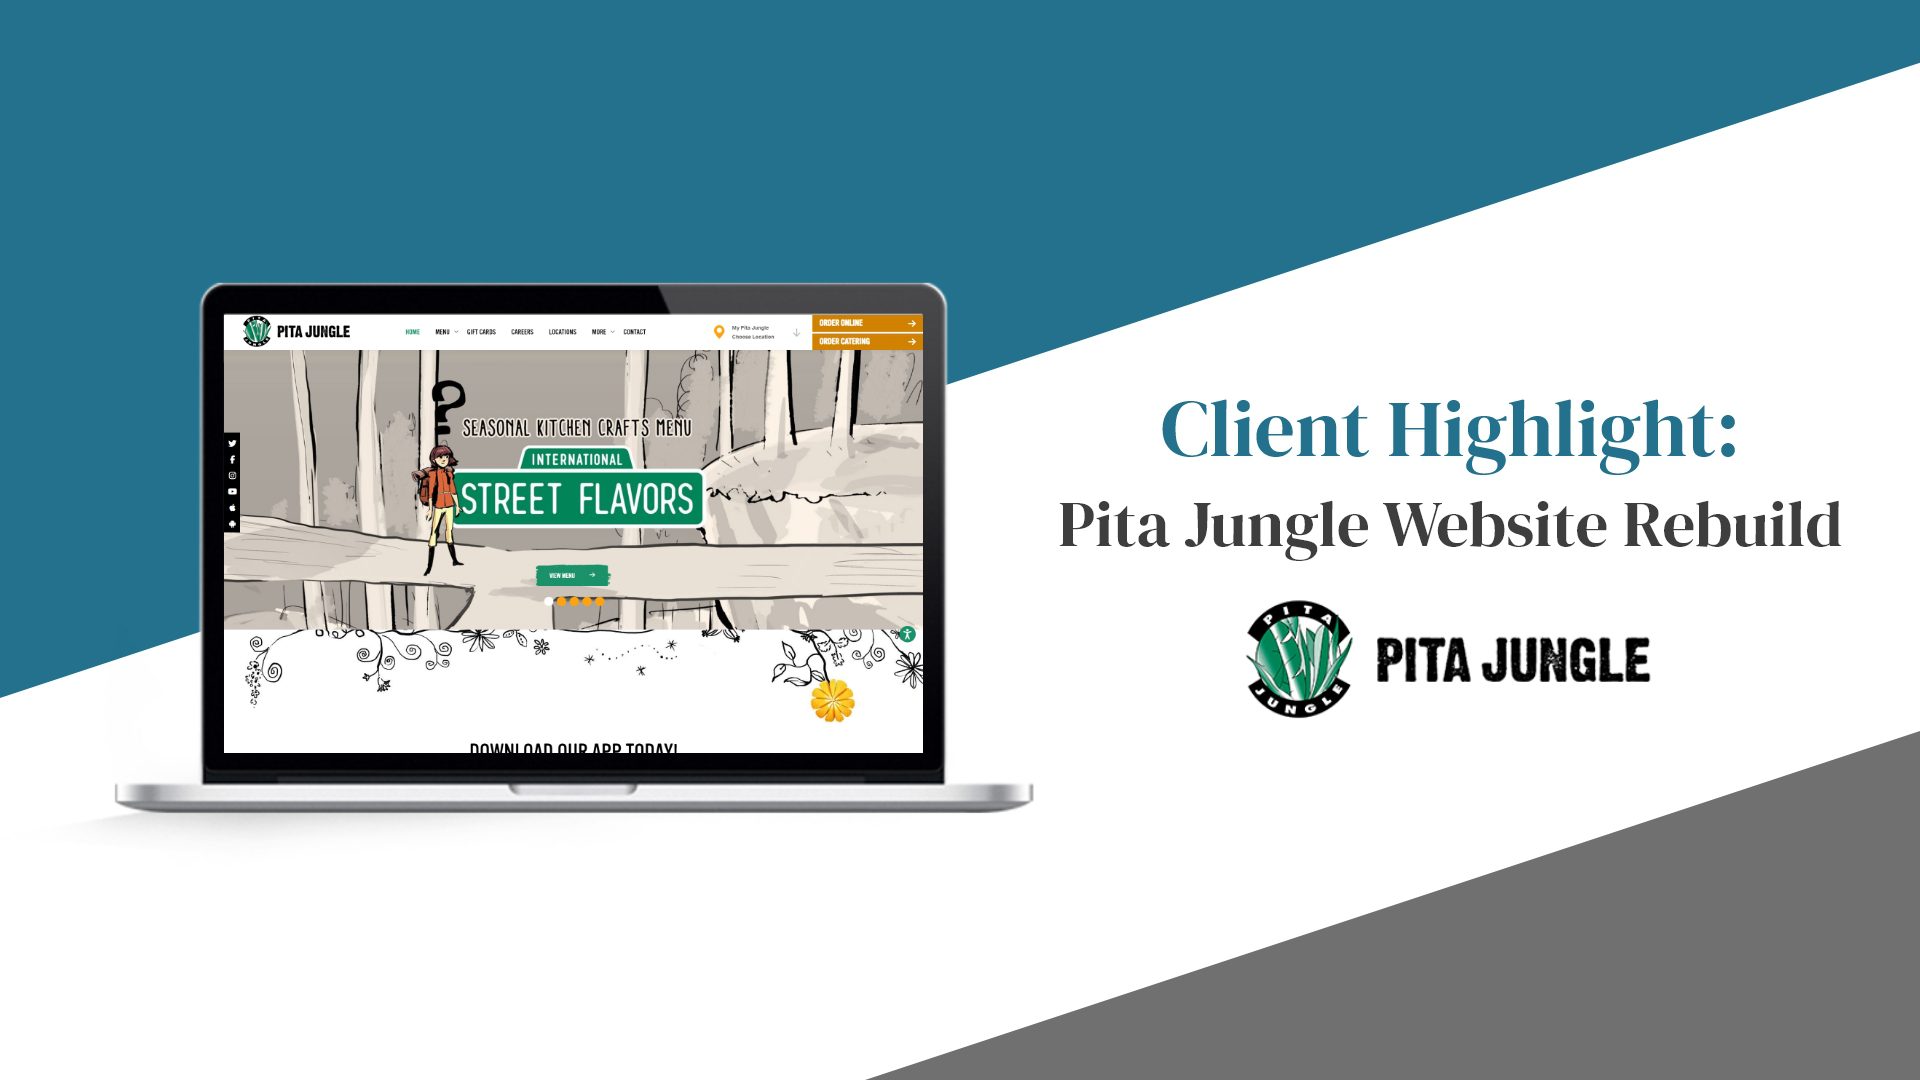 Client Highlight: Pita Jungle Website Rebuild